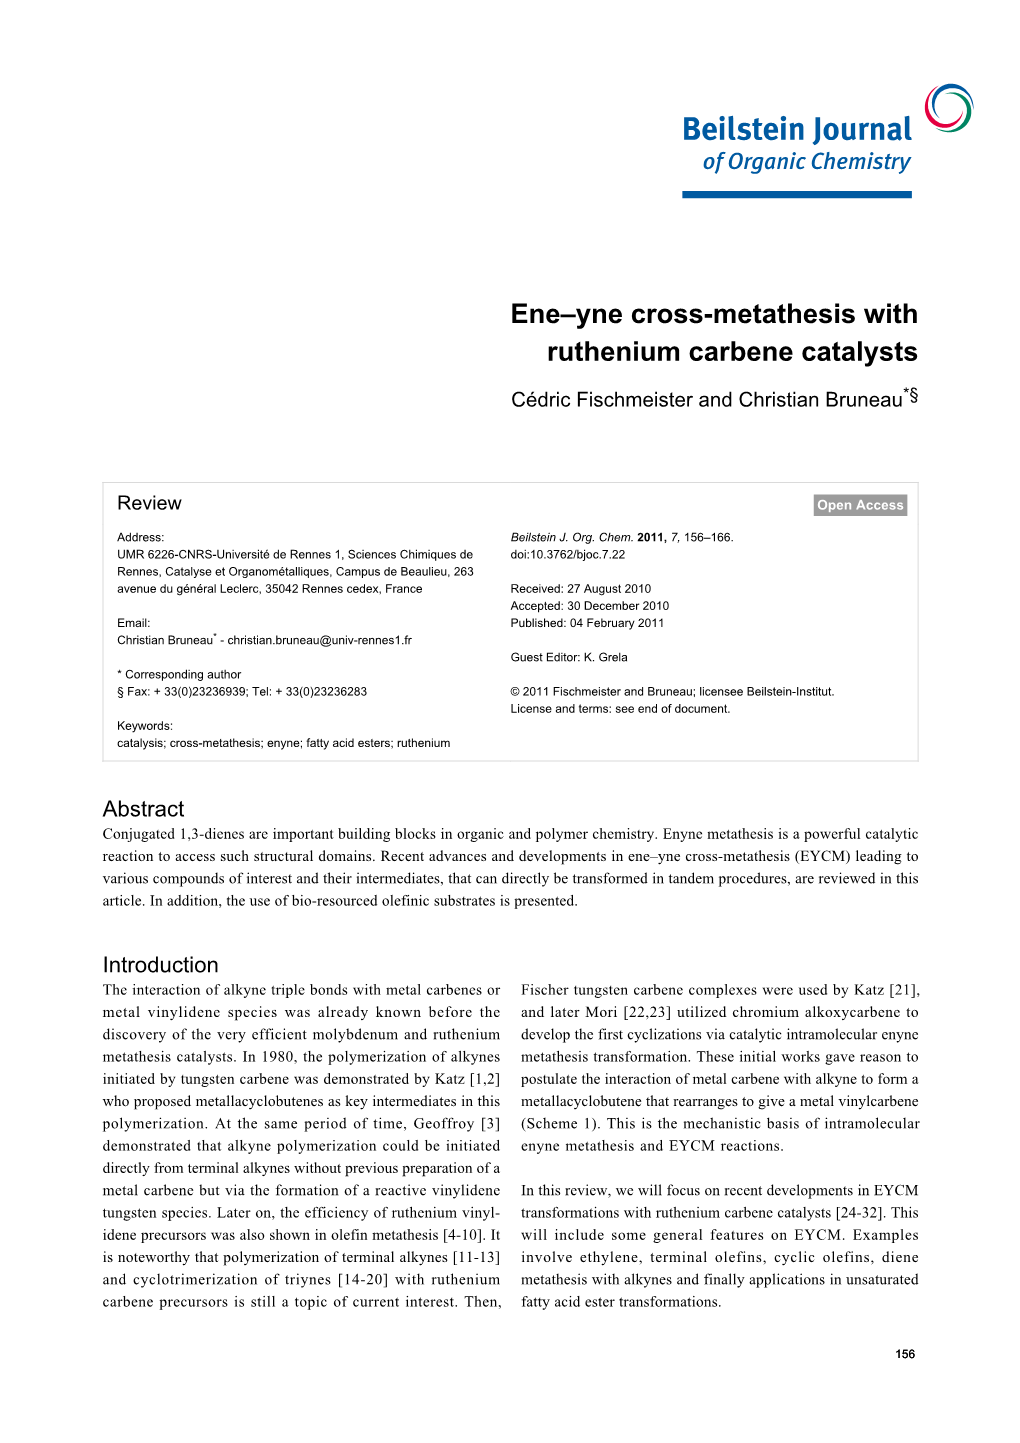 Ene–Yne Cross-Metathesis with Ruthenium Carbene Catalysts